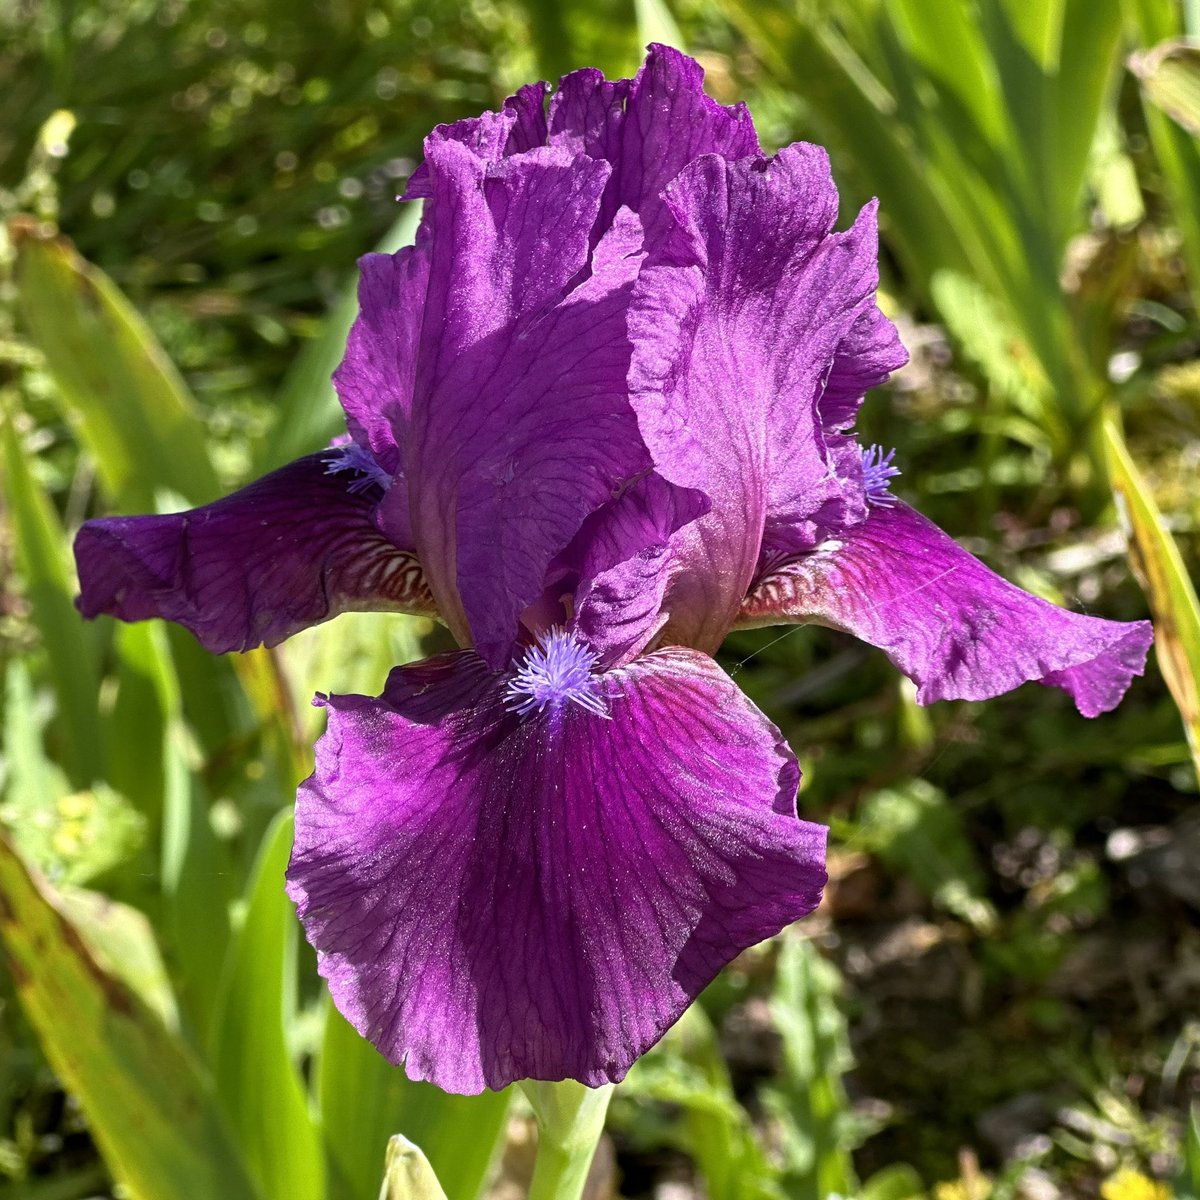 IB Iris ‘Voila’ is an early splash of rich purple across the beds, always an eye catcher so early on! #intermediateiris #voila #droughttolerantplants #beardedirises #iris #purpleflowers #earlyflowers #irises #lincolnshire #seagatenurseries